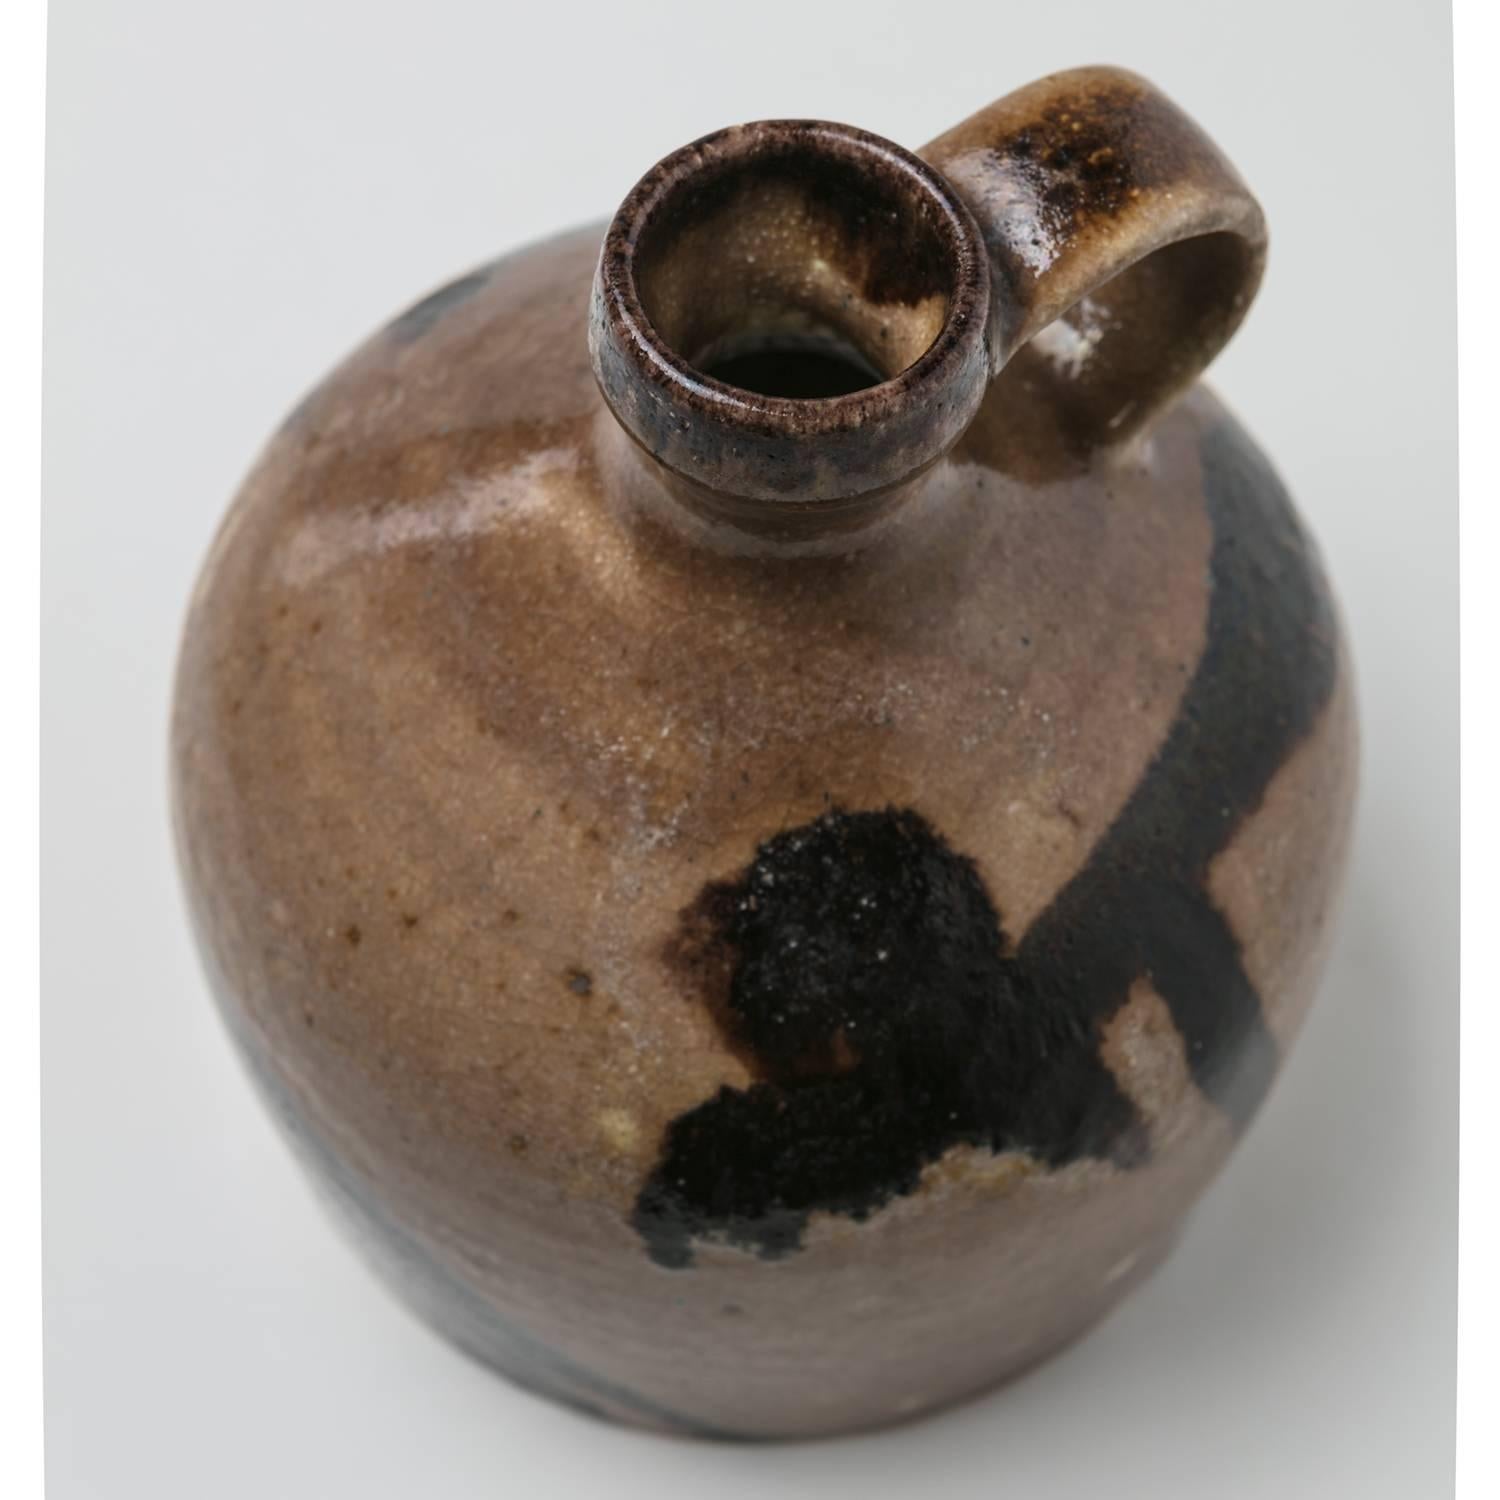 Amazing glazed ceramic bottle by Guido Gambone.
Abstract dark brown decoration.